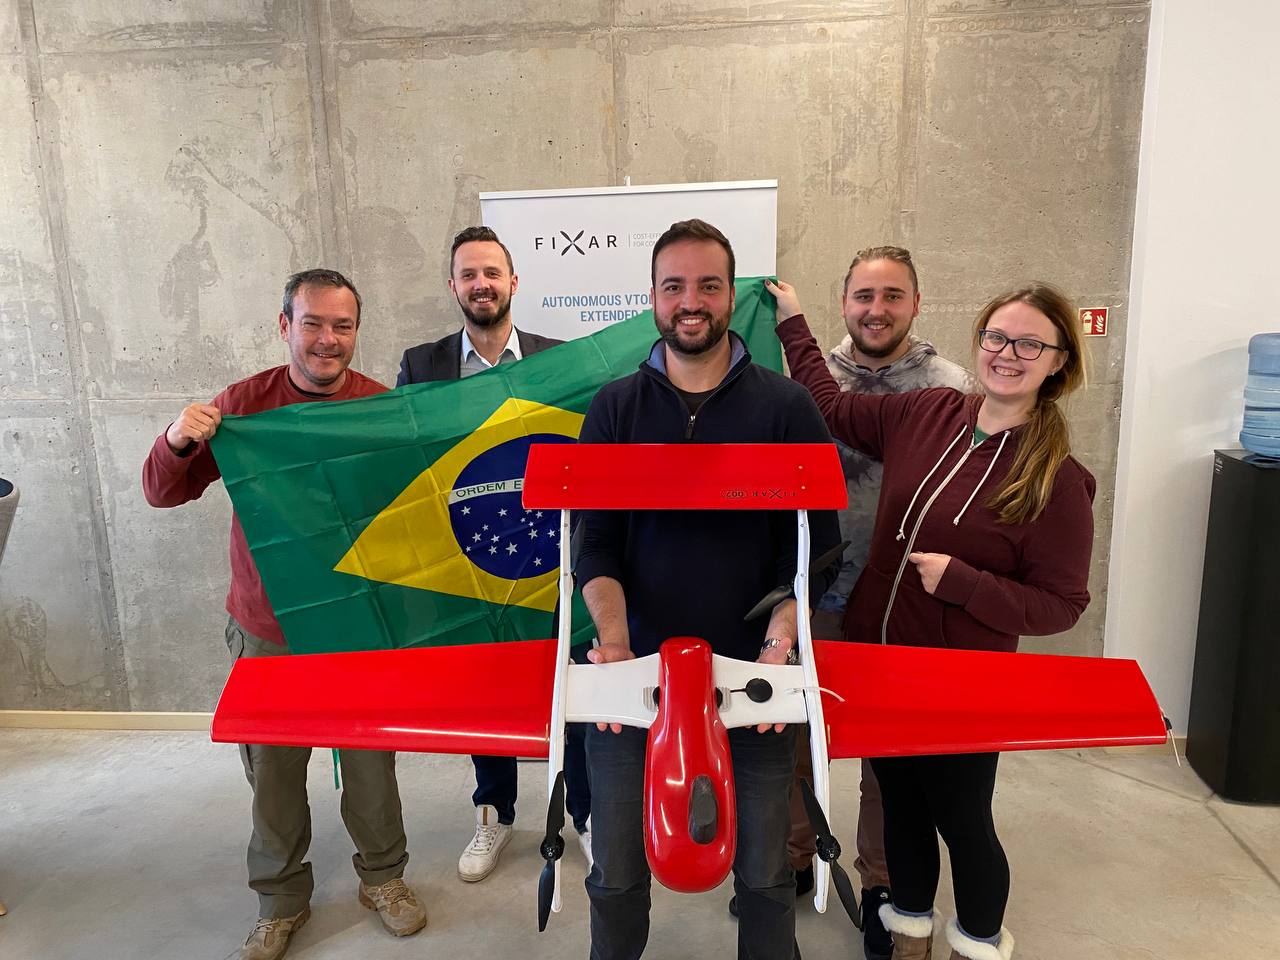 FIXAR drones enter the Brazil market to meet the BVLOS drones demand